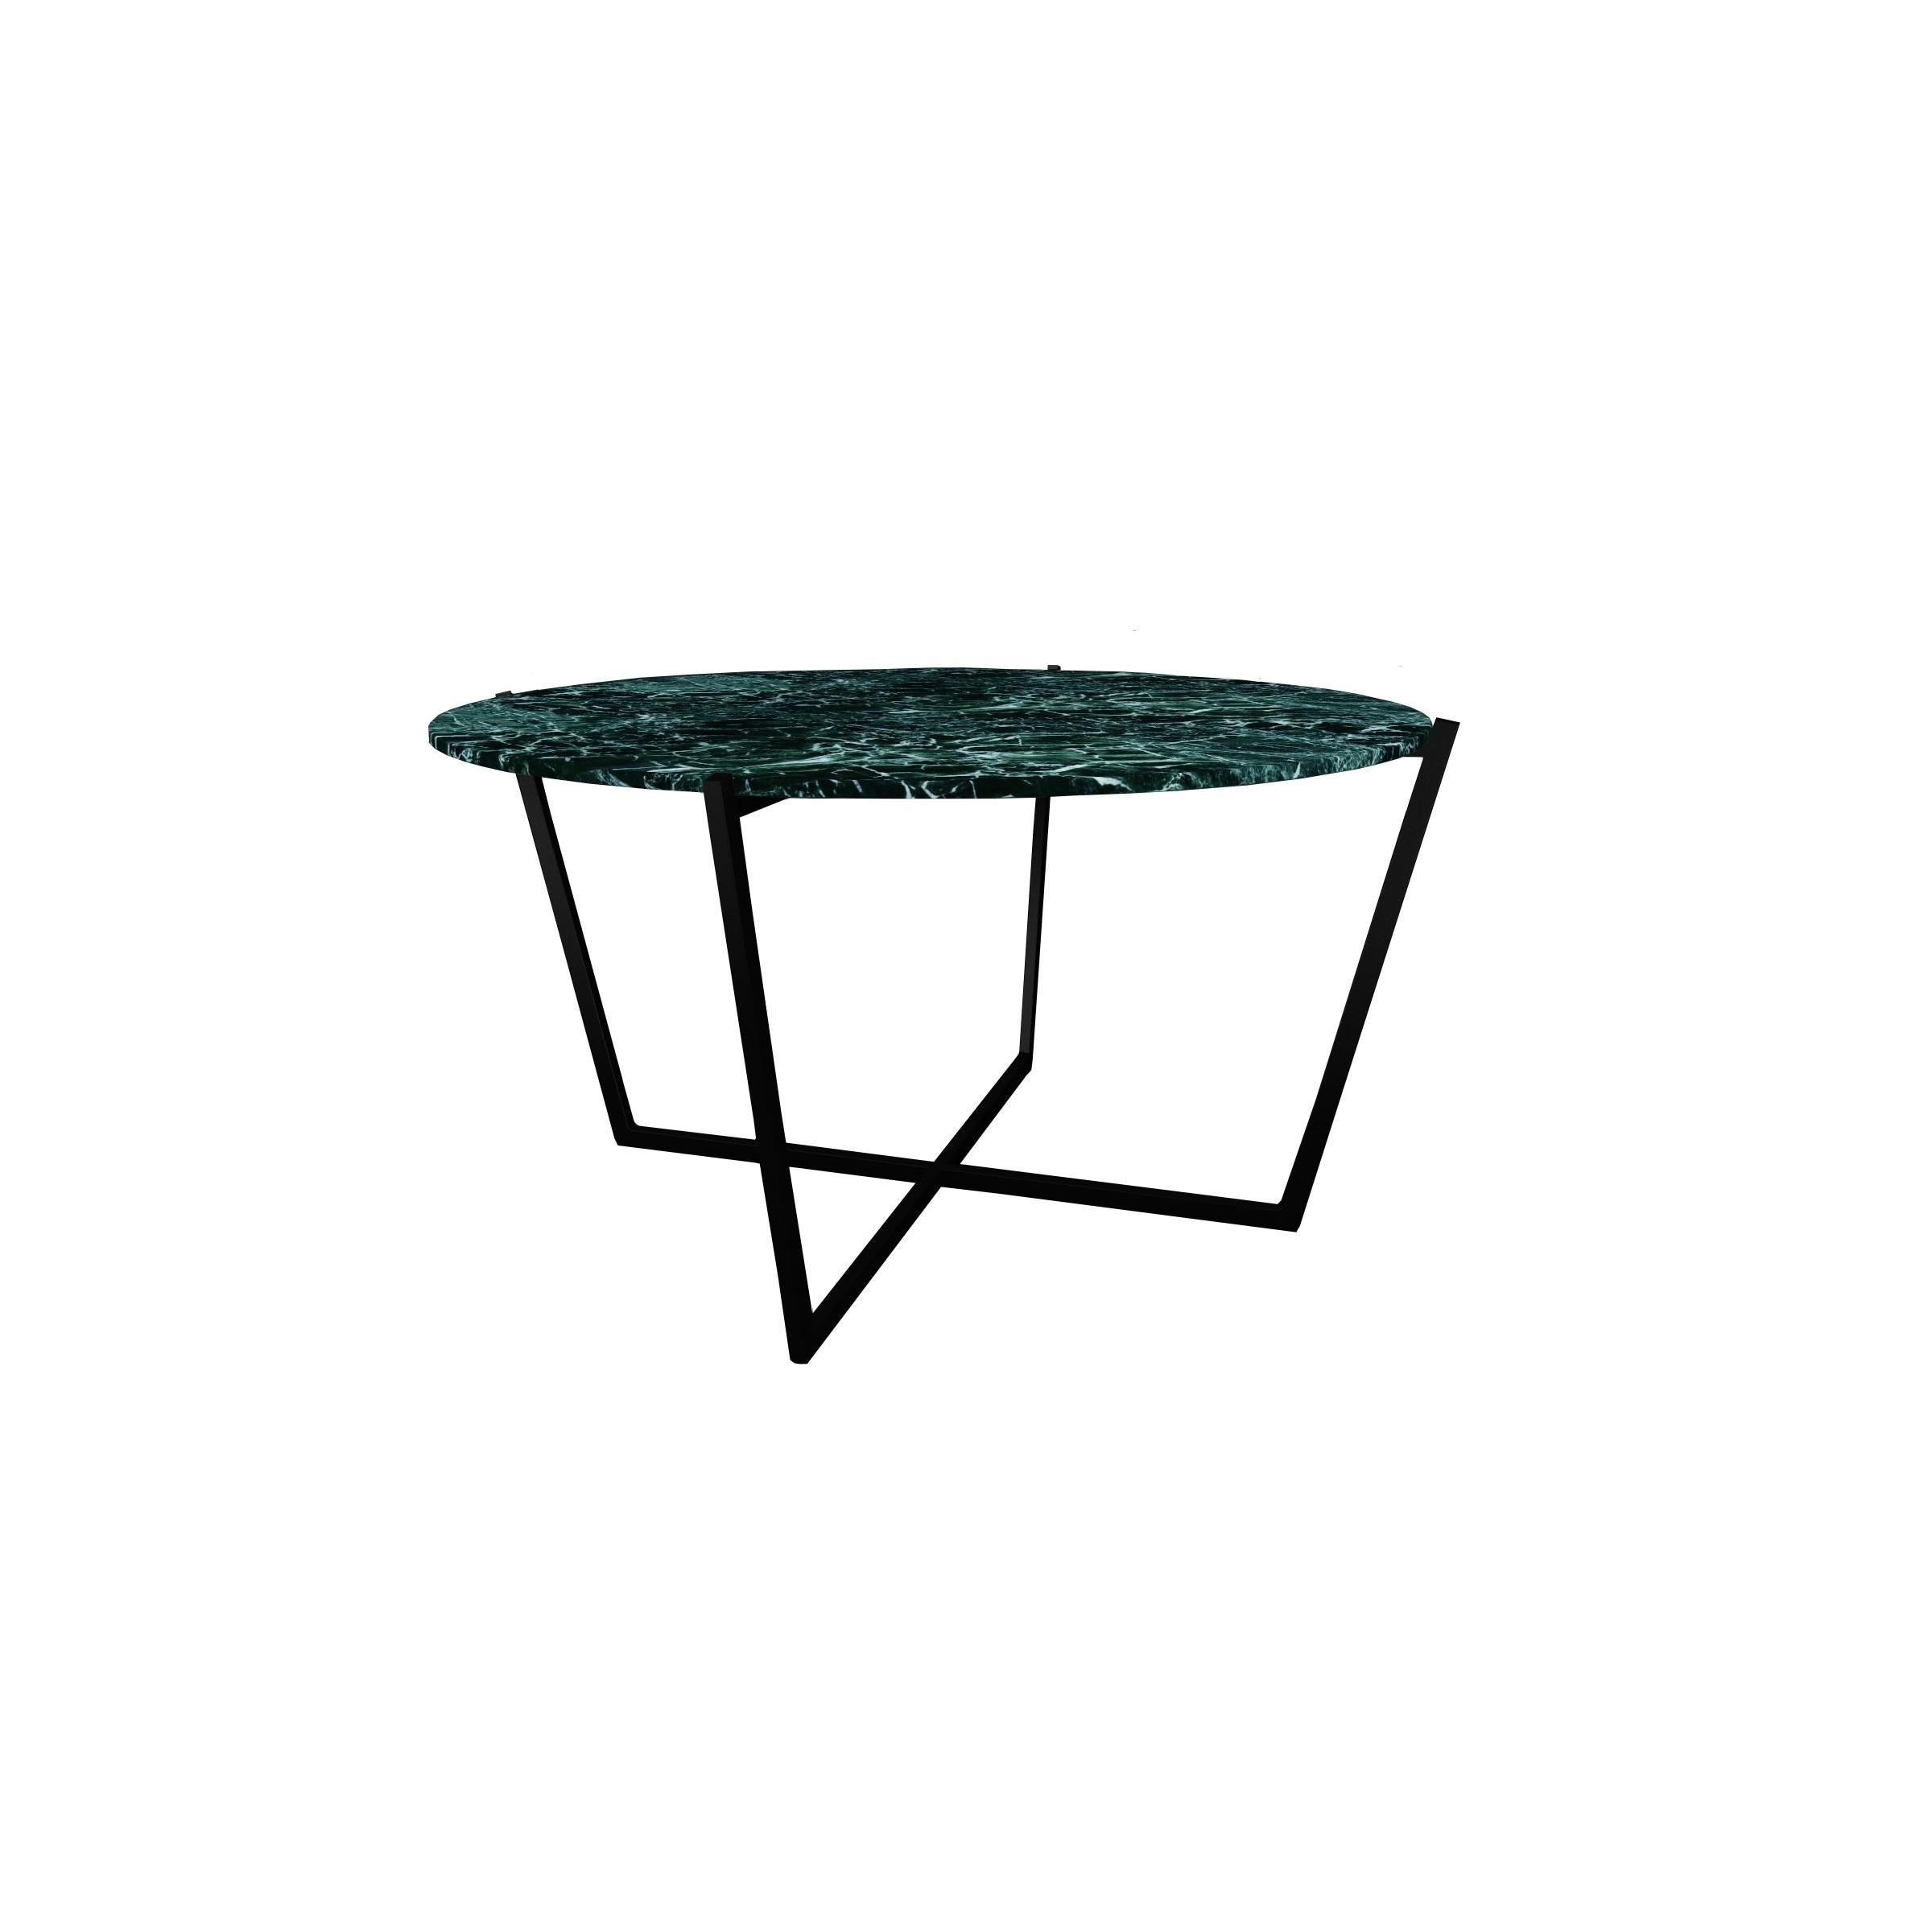 Scandinavian Modern NORDST EMMA Dining Table, Italian Black Eagle Marble, Danish Modern Design, New For Sale